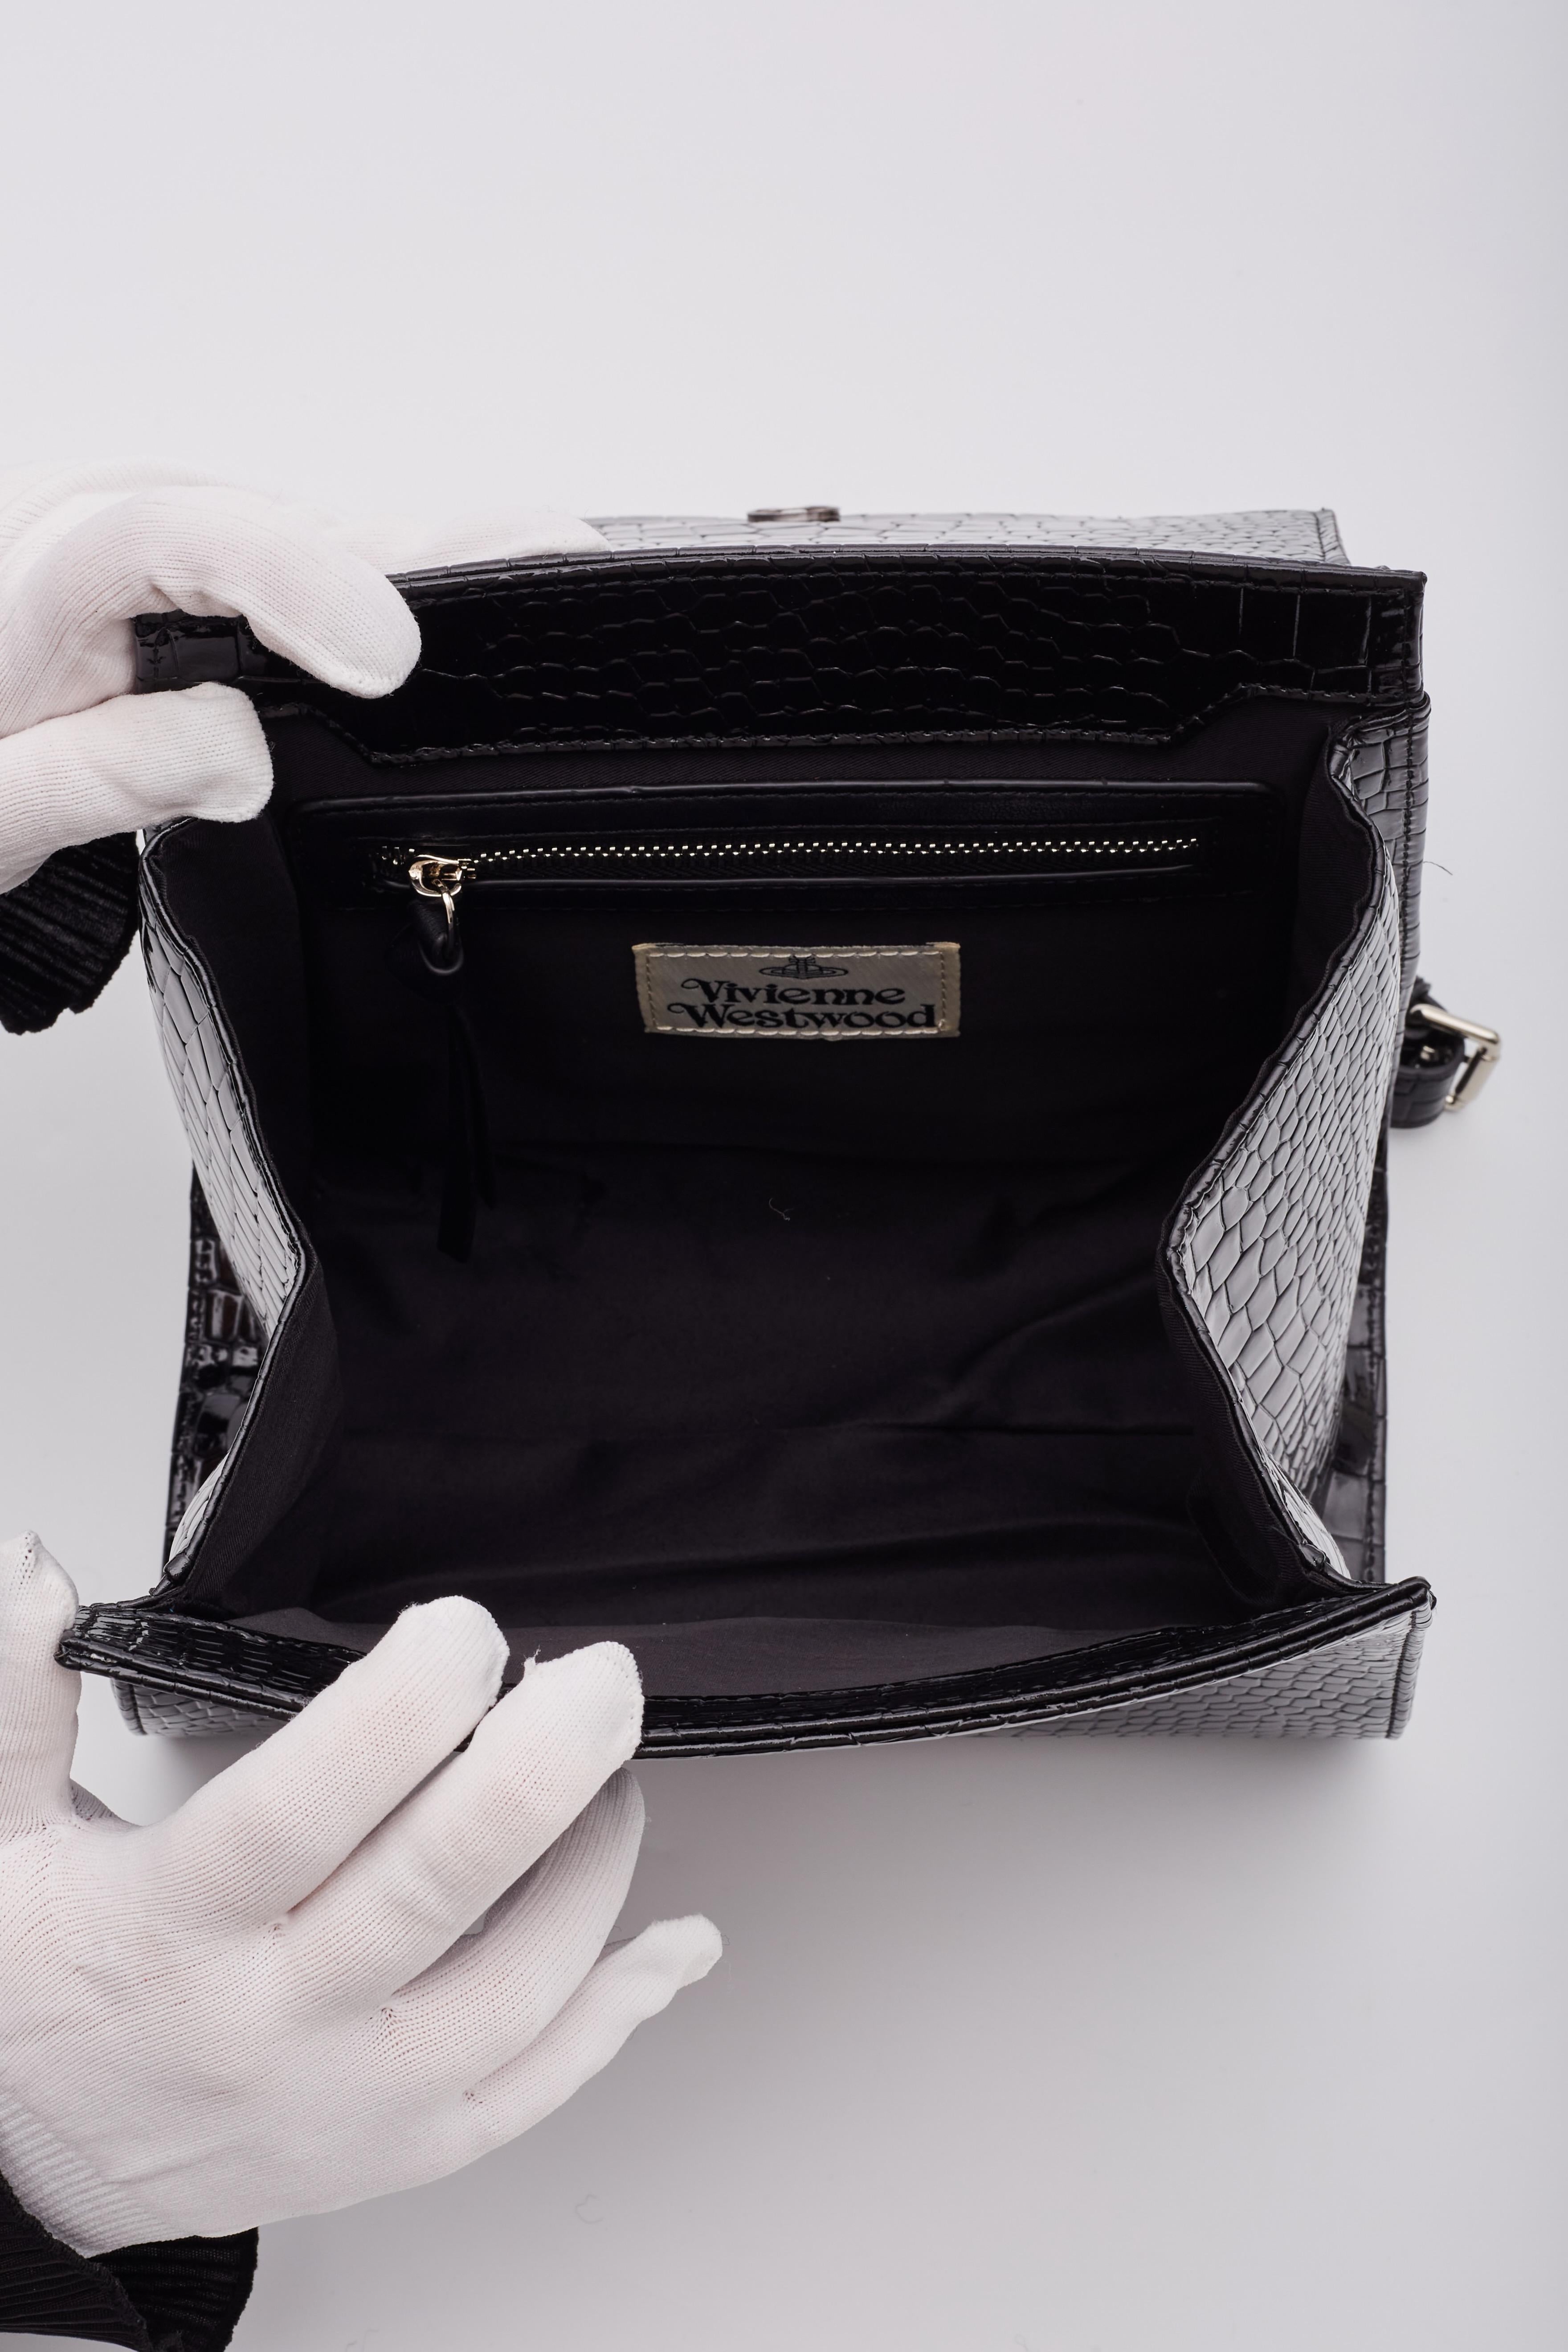 Vivienne Westwood Nana Black Croc Embossed Grace Backpack For Sale 3